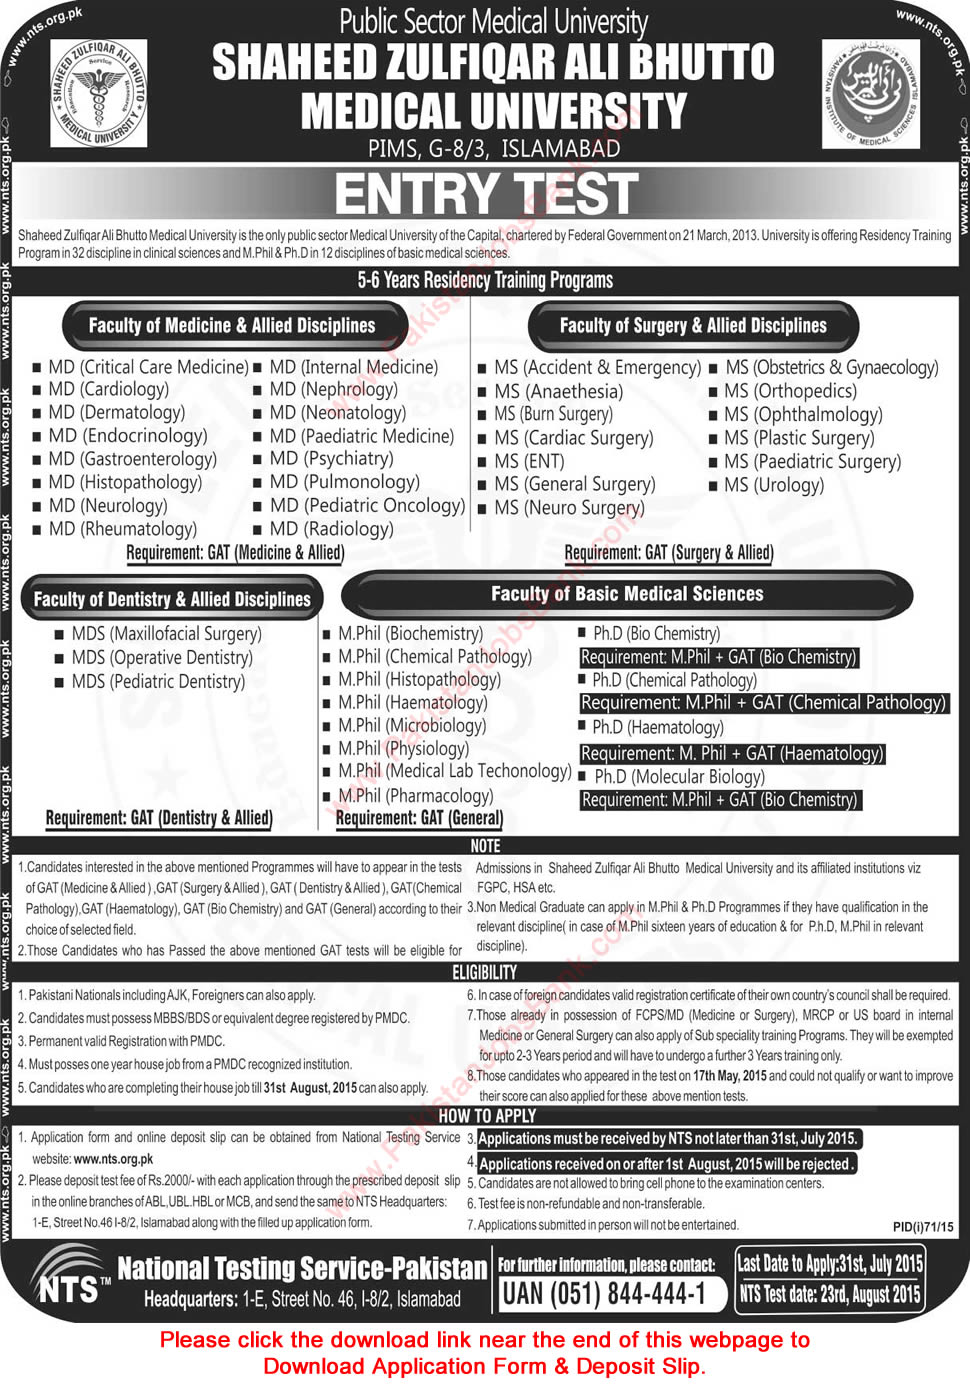 PIMS Residency Program 2015 July NTS Application Form Shaheed Zulfiqar Ali Bhutto Medical University Islamabad